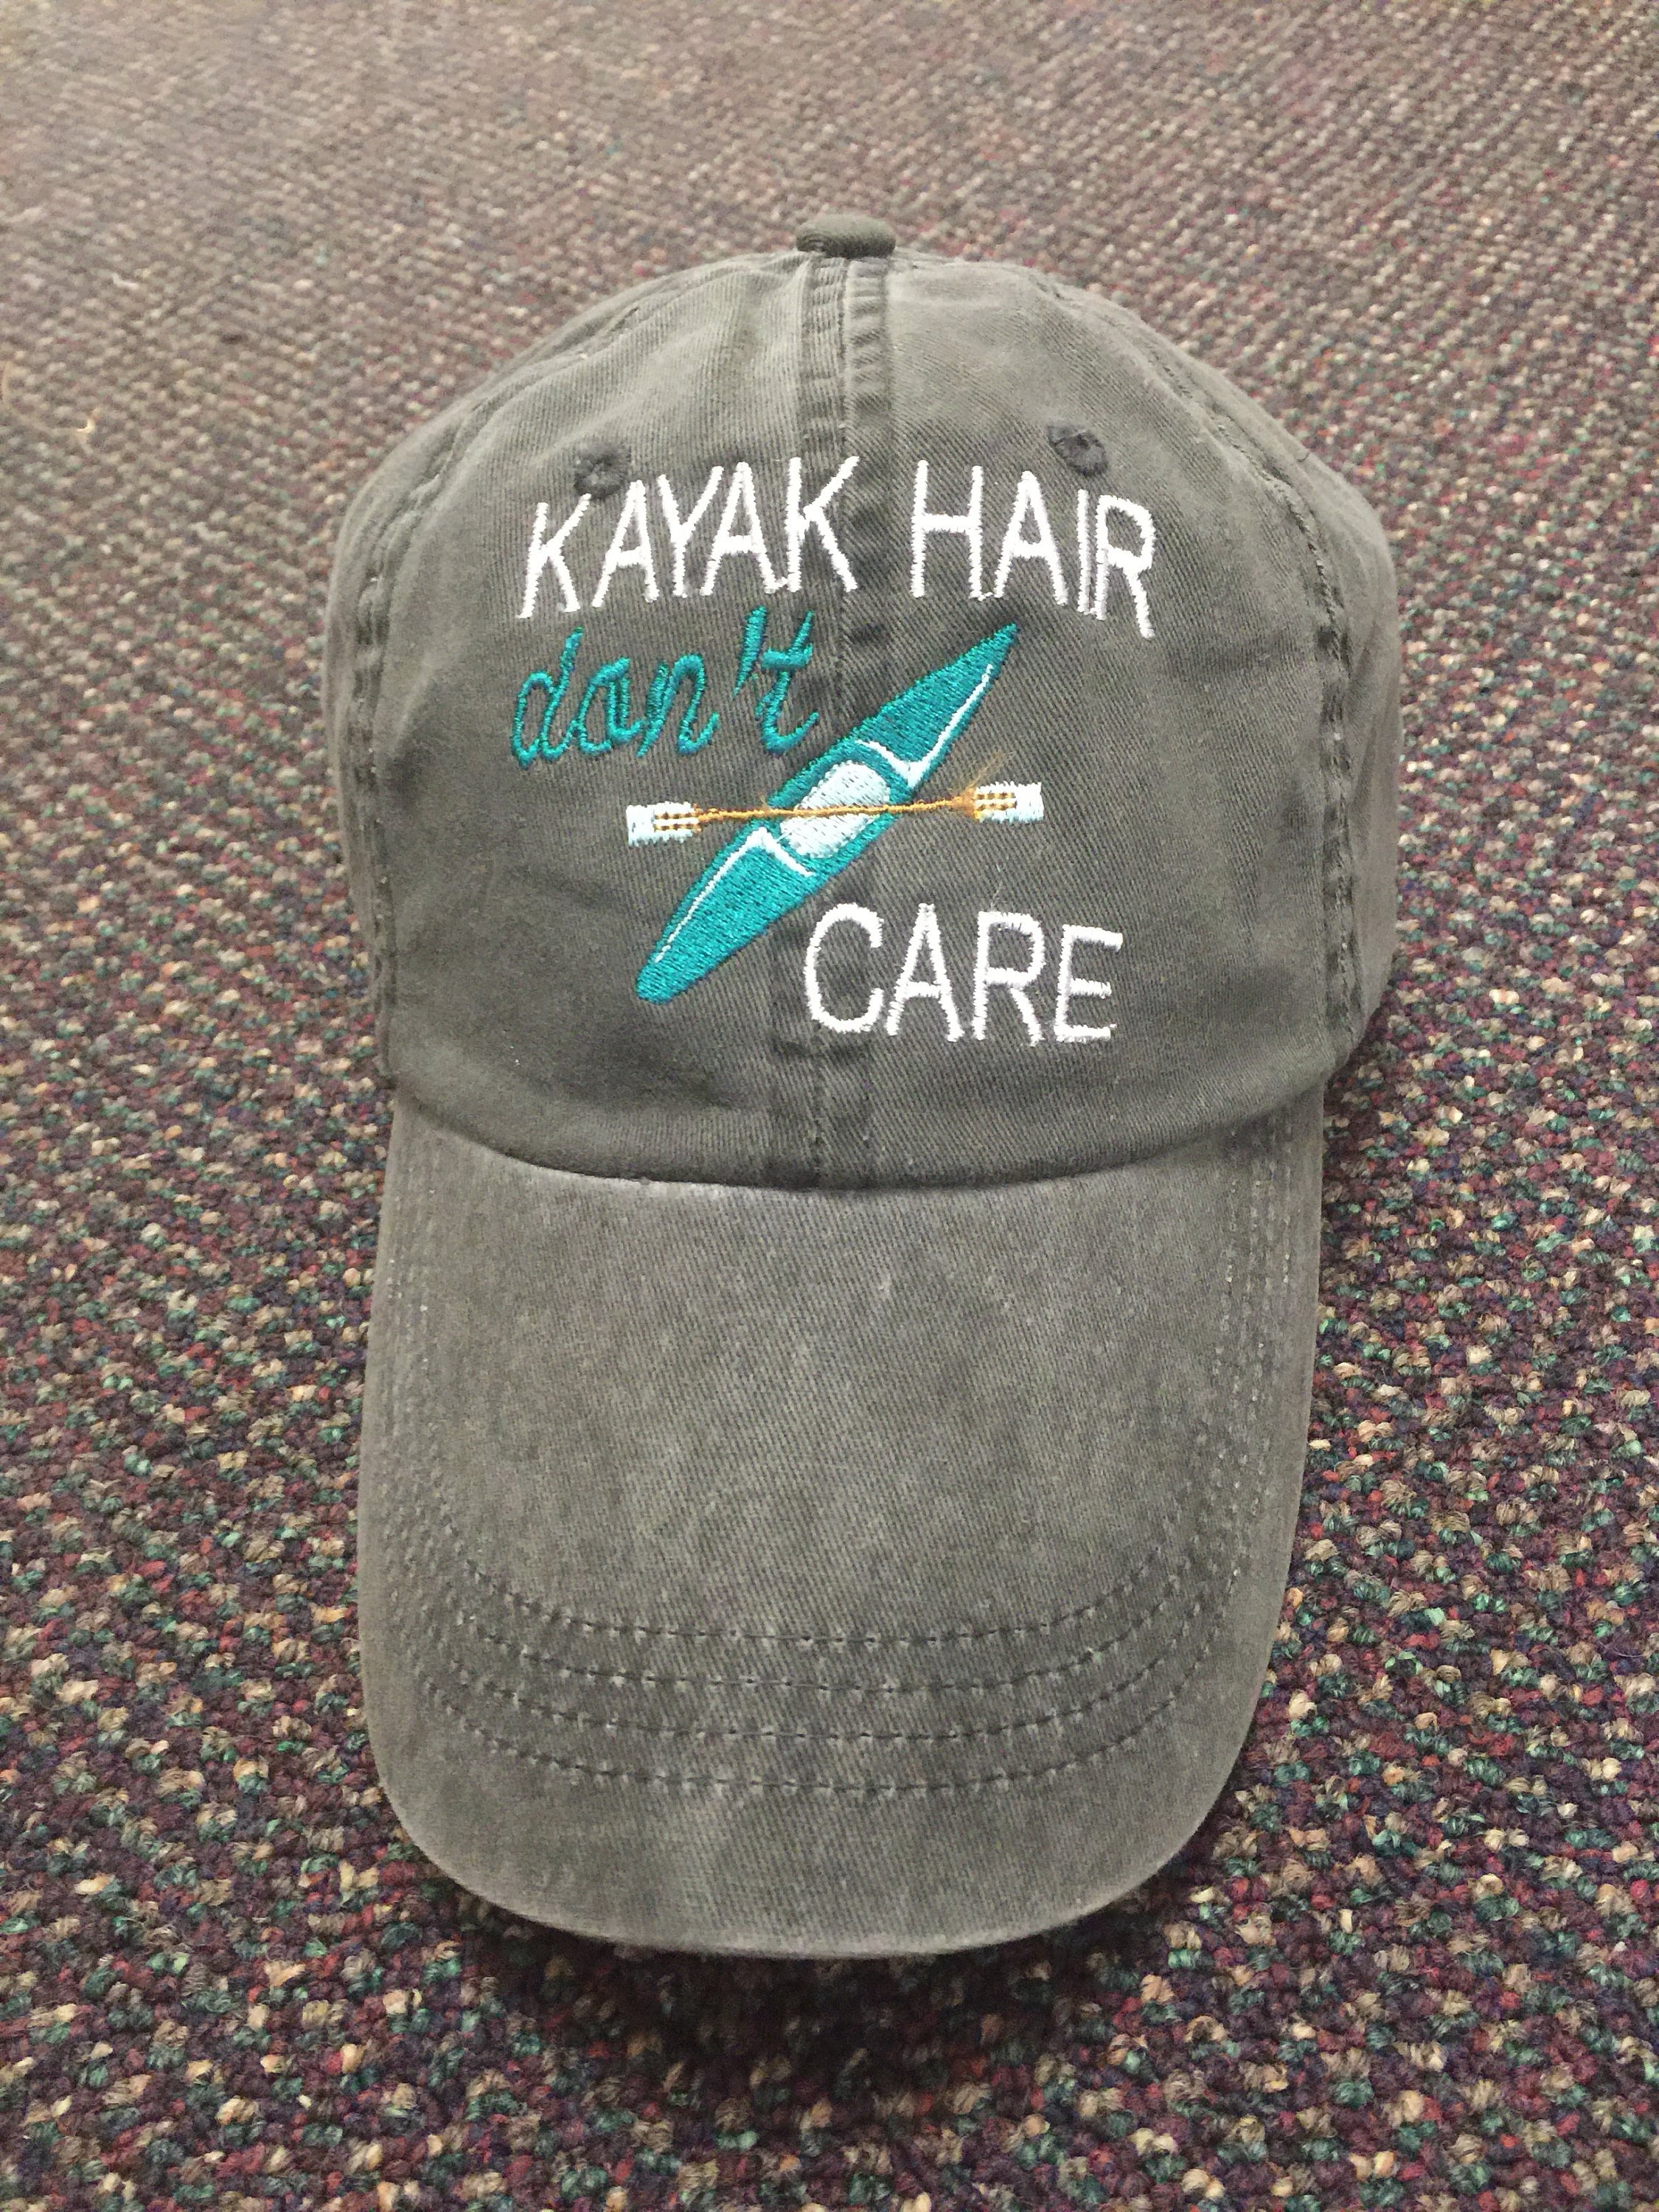 Kayak Hair Don't Care Hat -  Canada